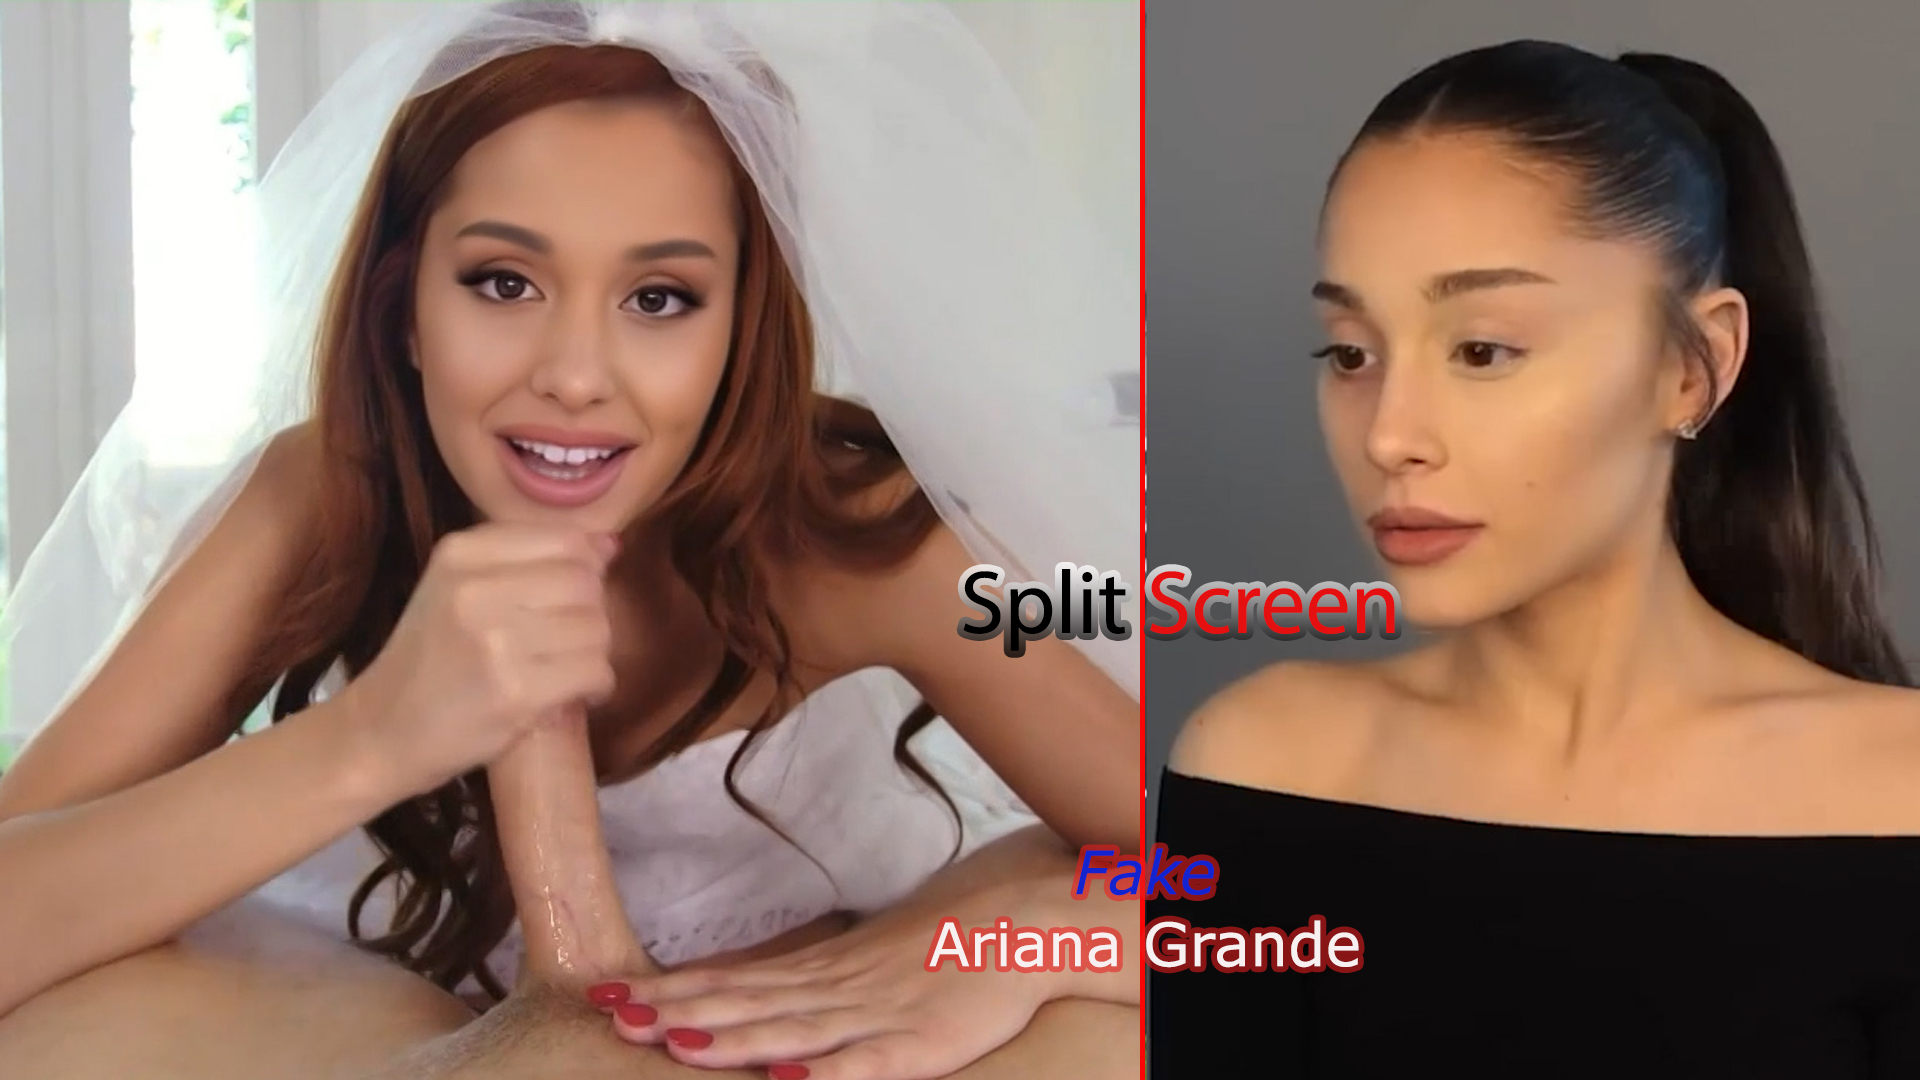 Fake Ariana Grande - (trailer) -4- / Split Screen / Free Download